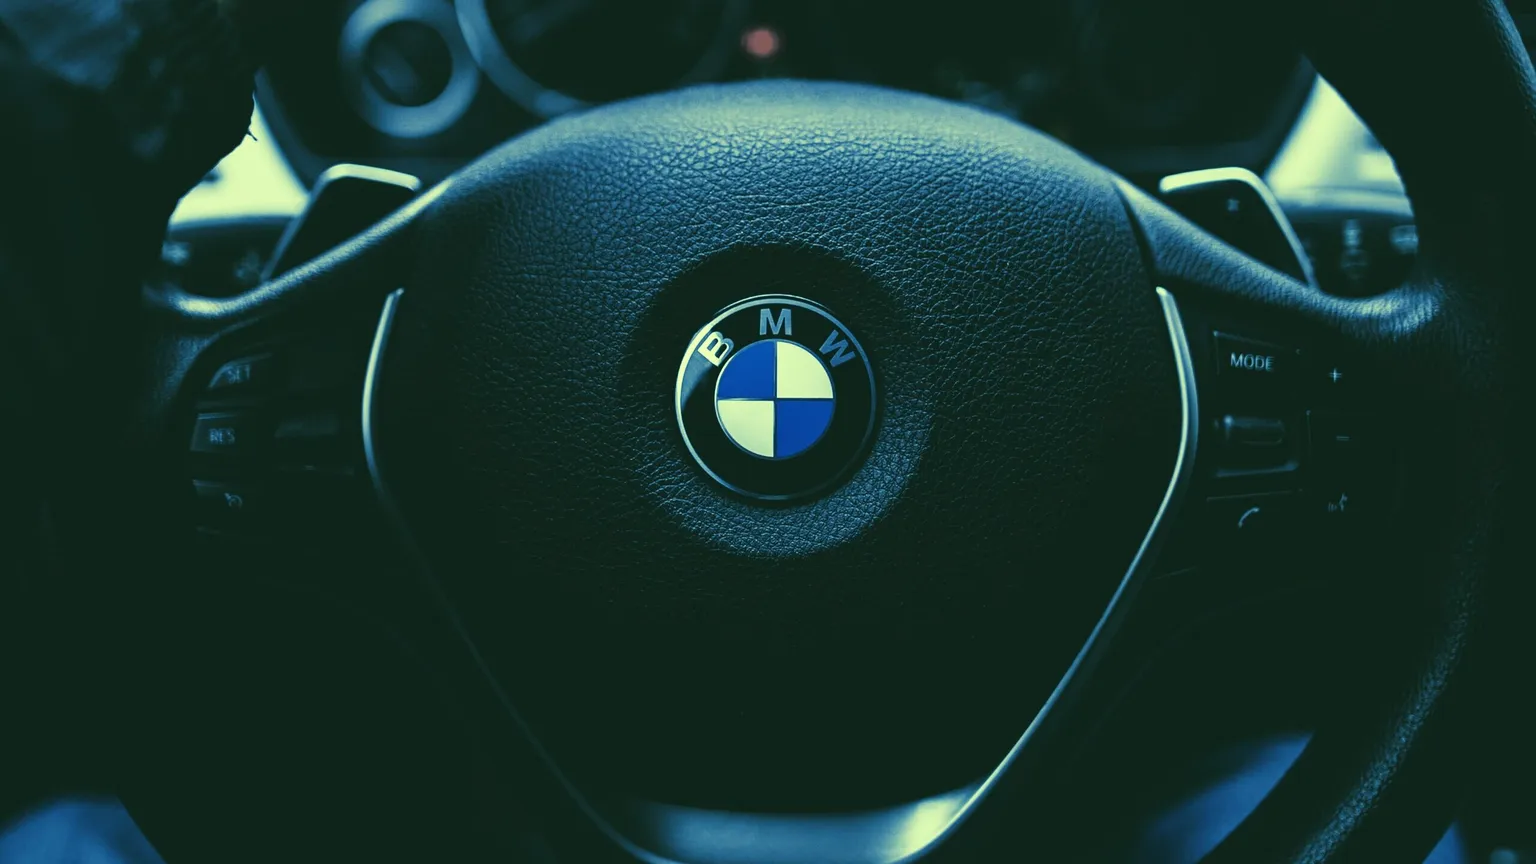 Steering wheel of a BMW car. Image: Unsplash